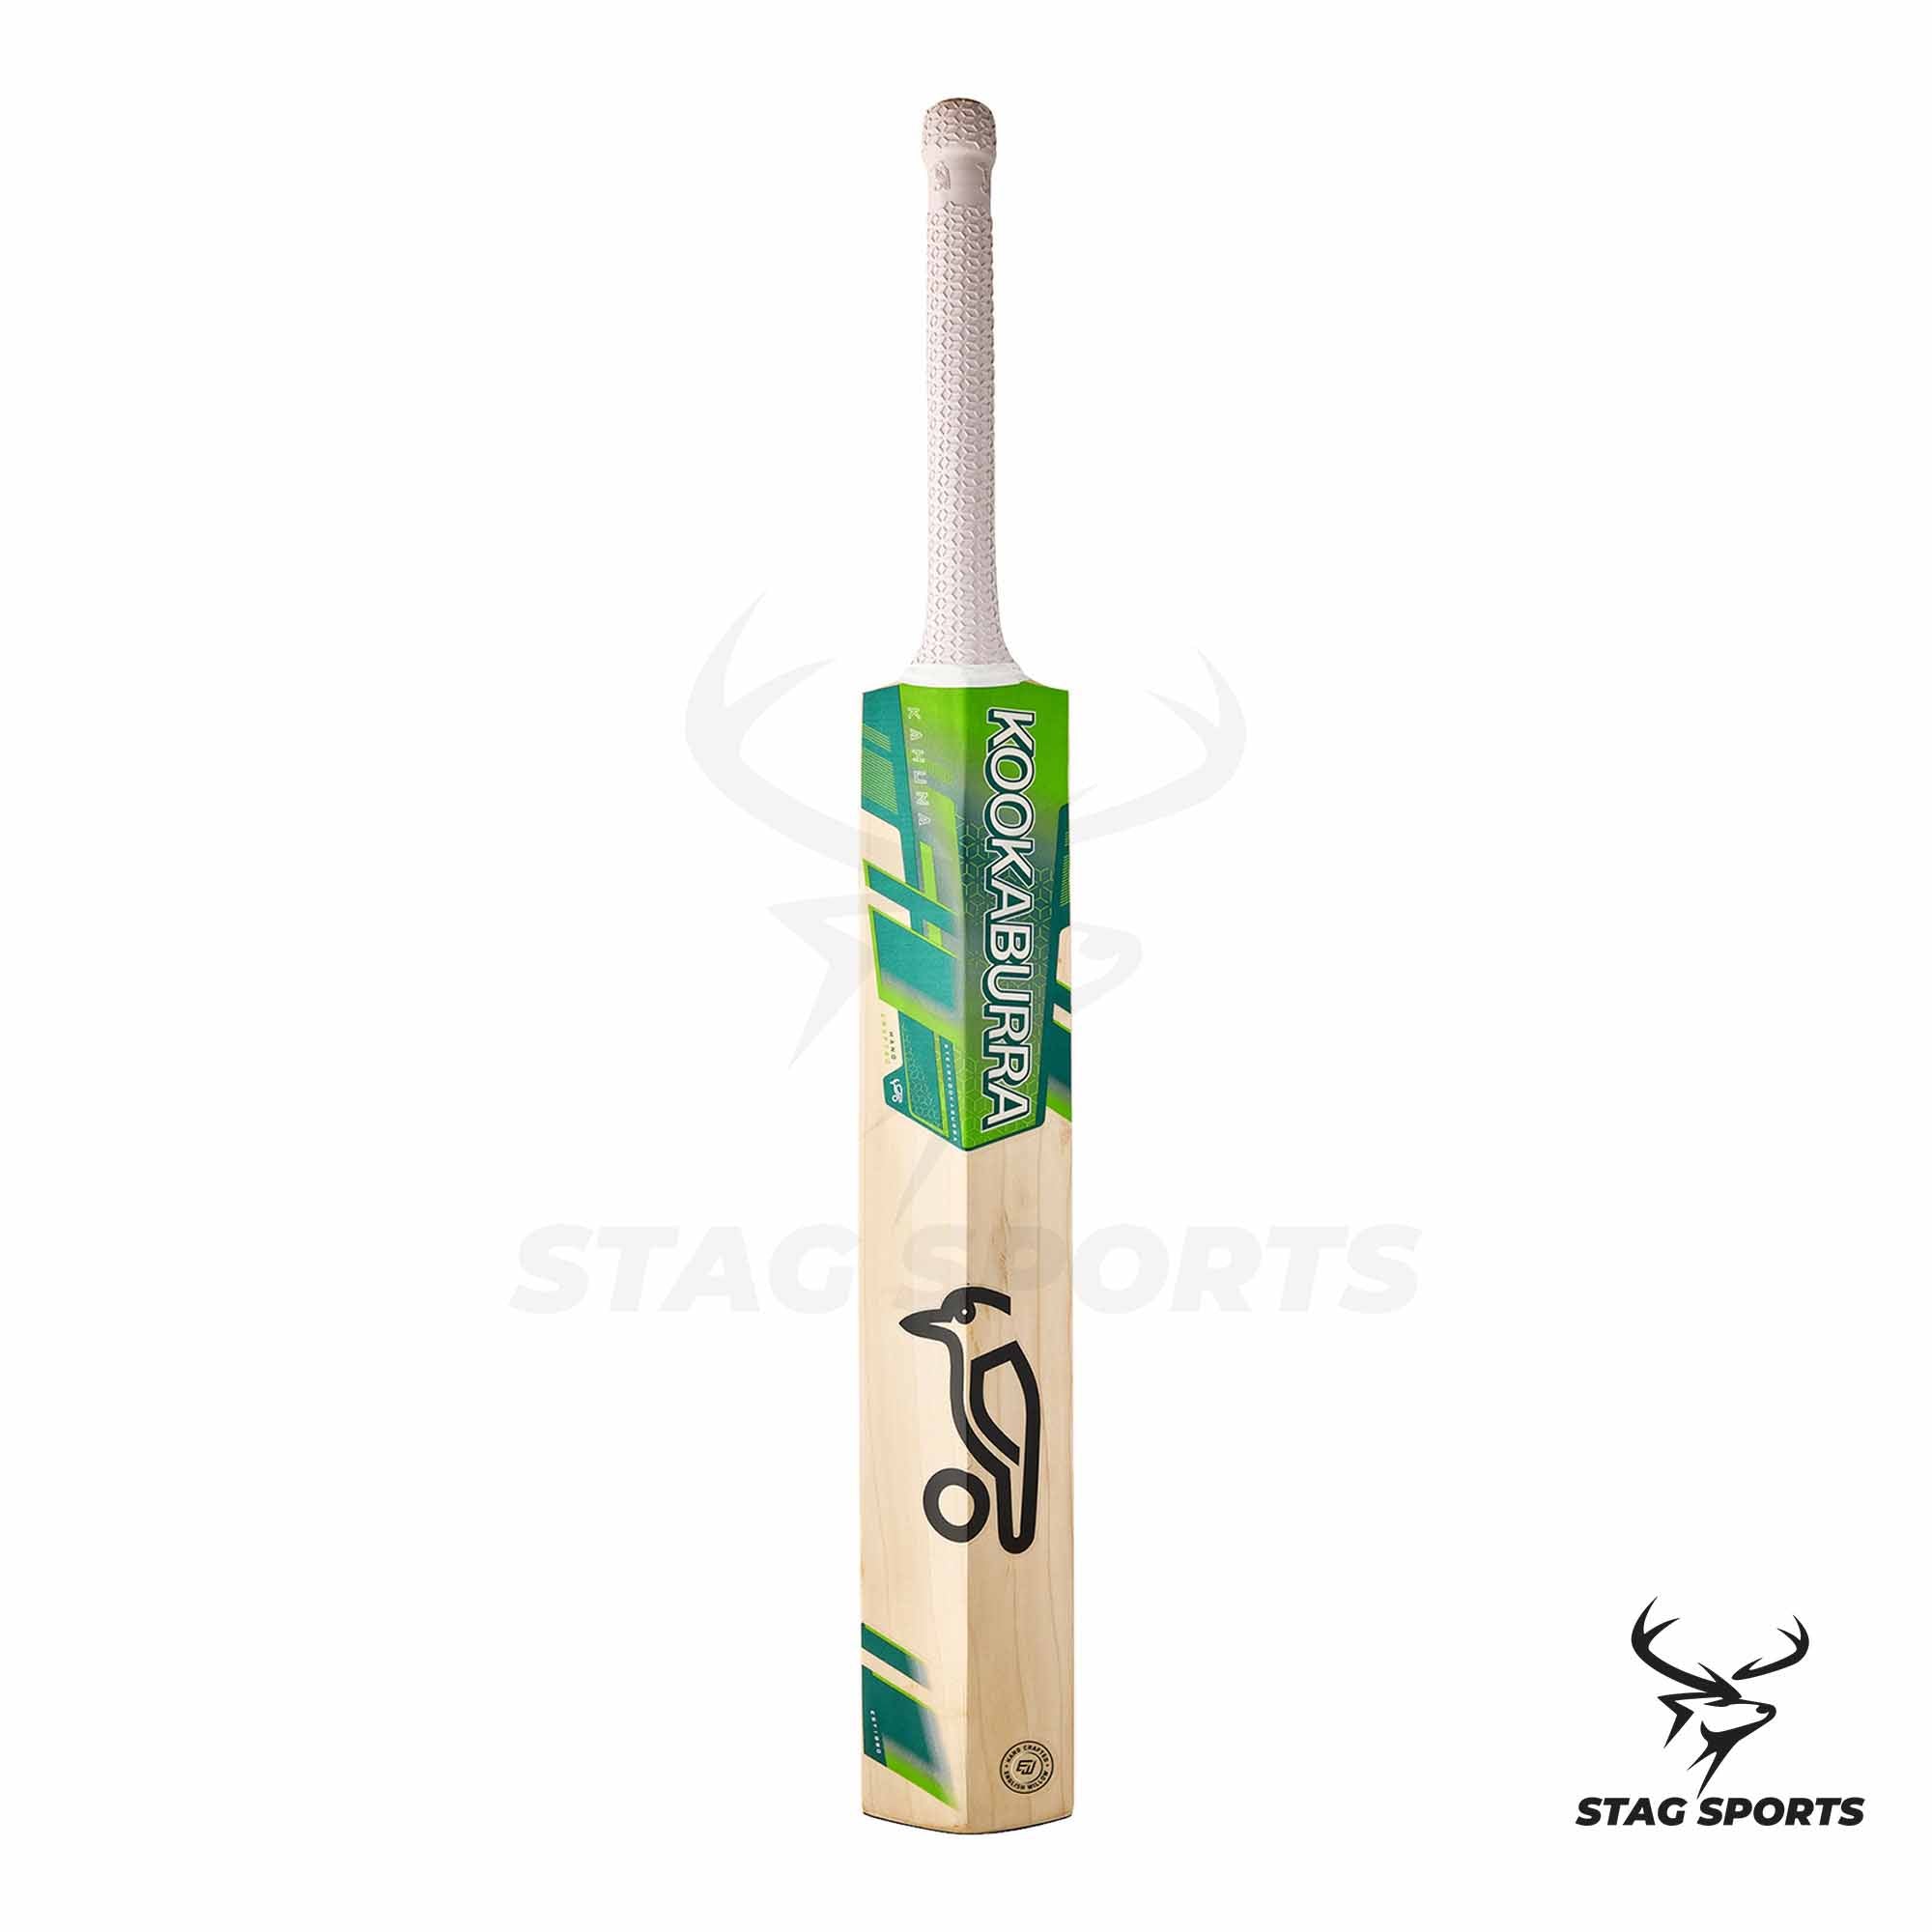 Kookaburra Kahuna Pro 5.0 Junior English Willow Cricket Bat